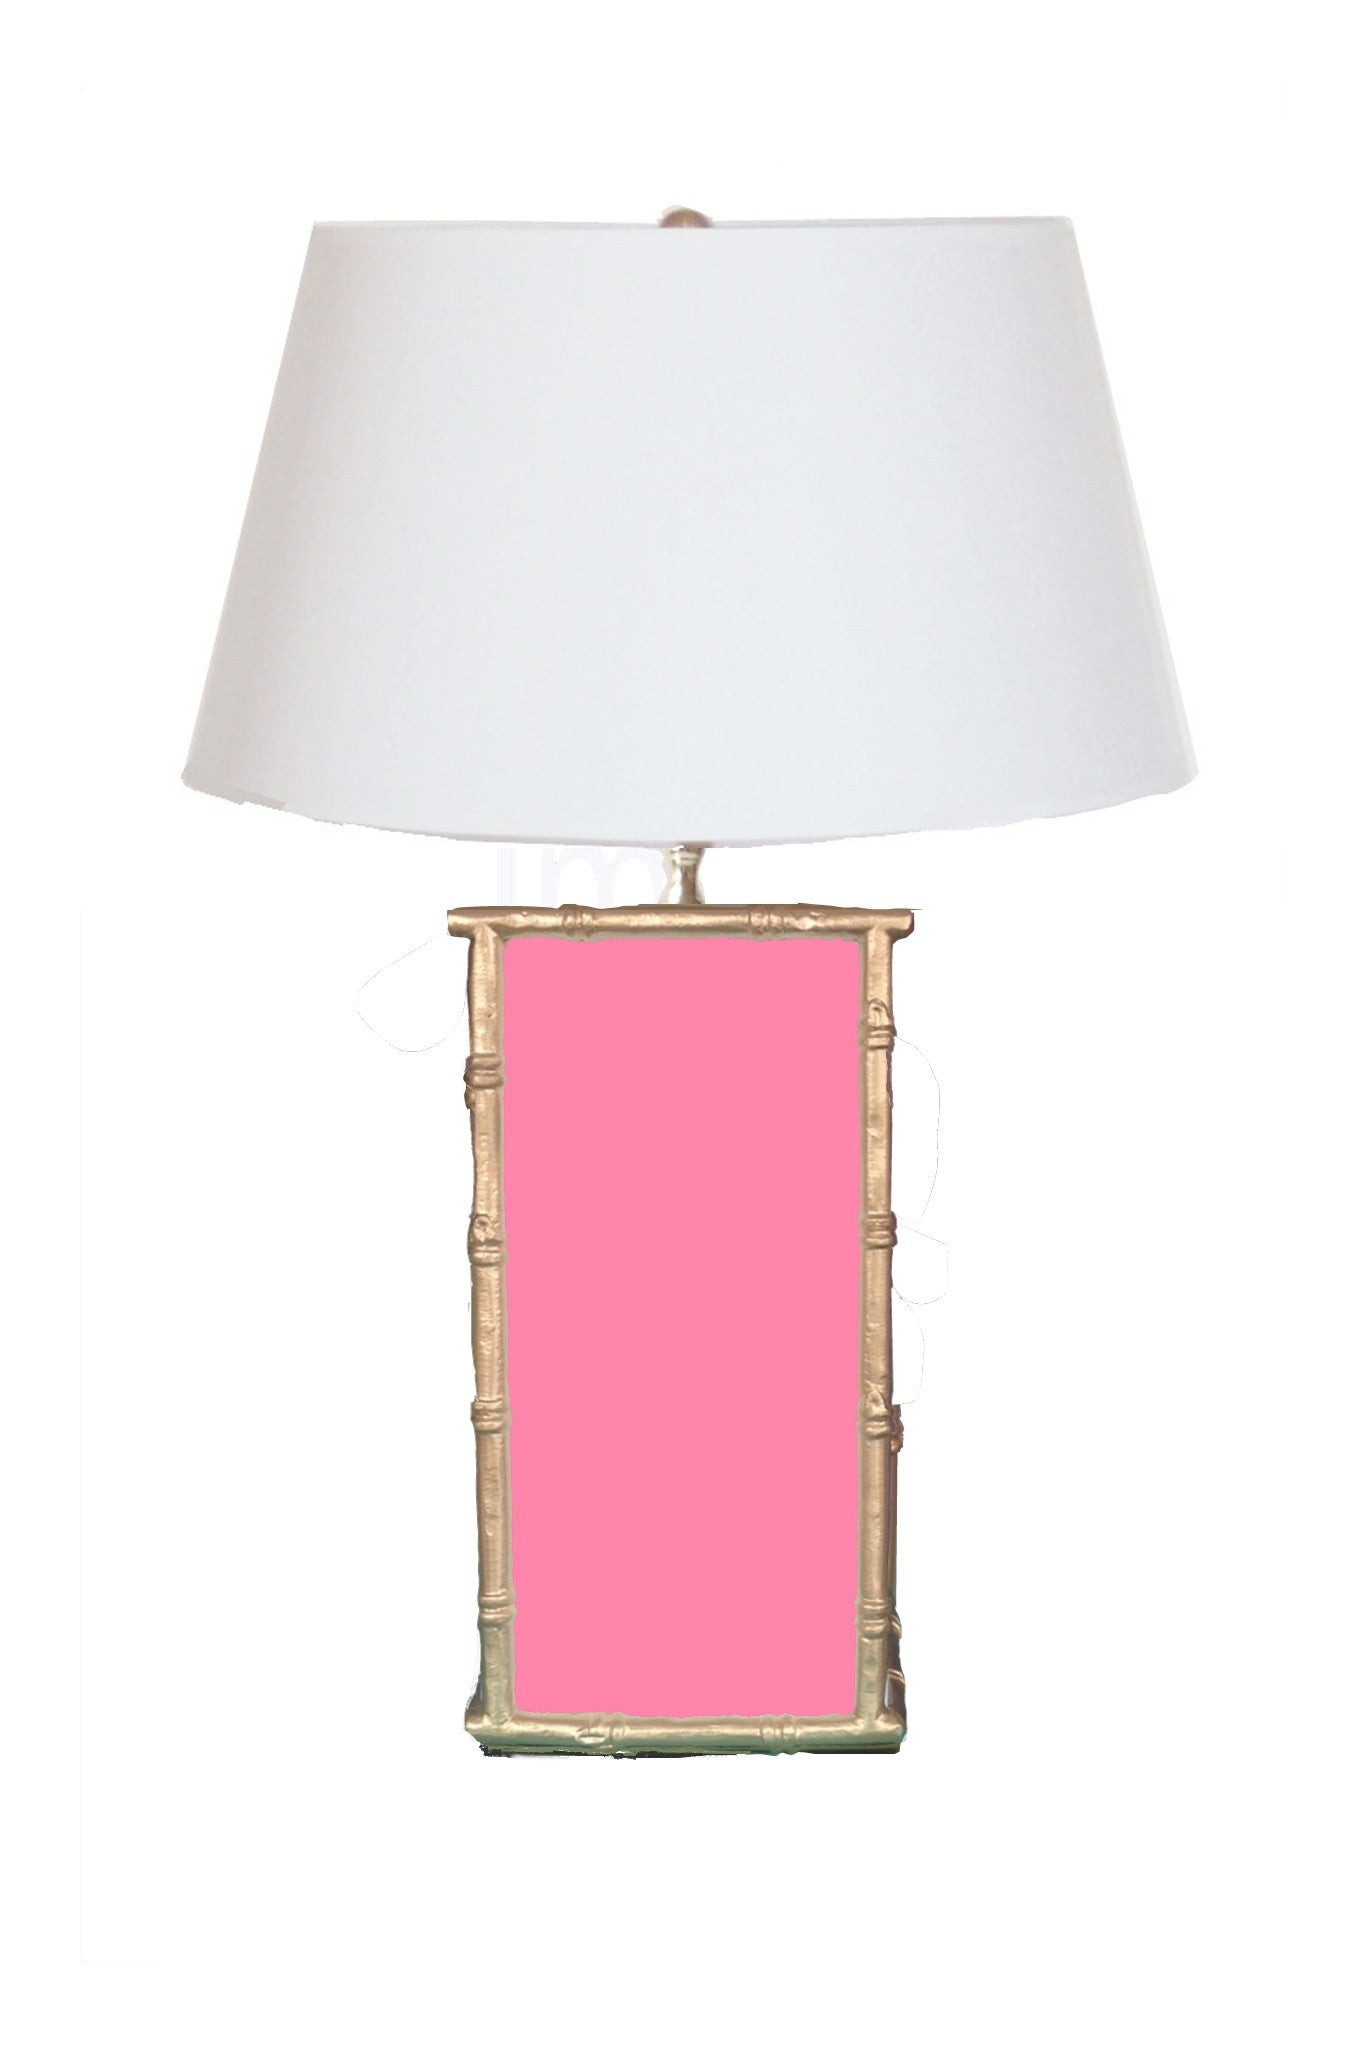 Dana Gibson Bamboo in Pink Lamp